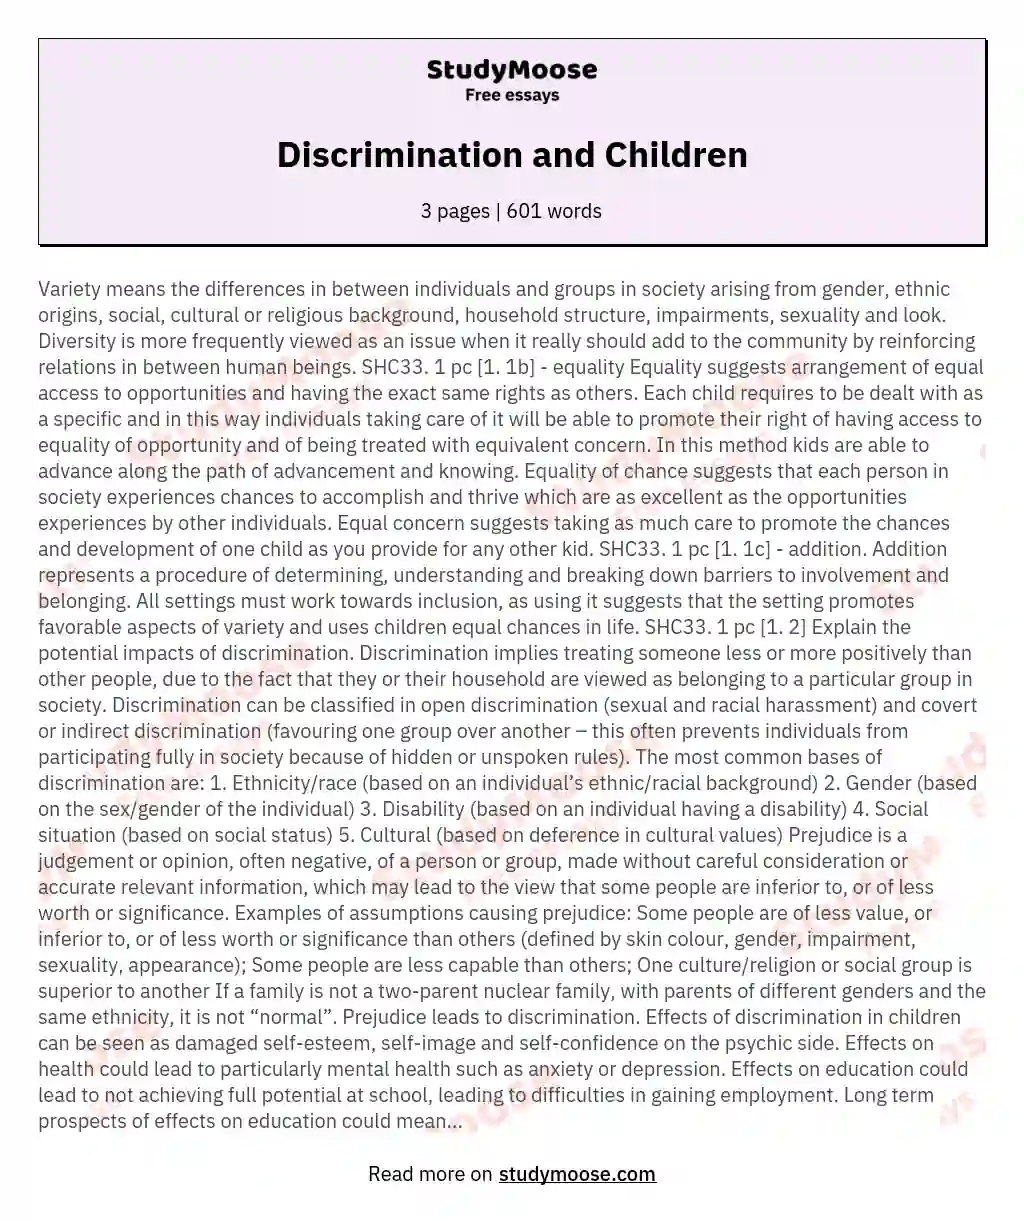 Discrimination and Children essay